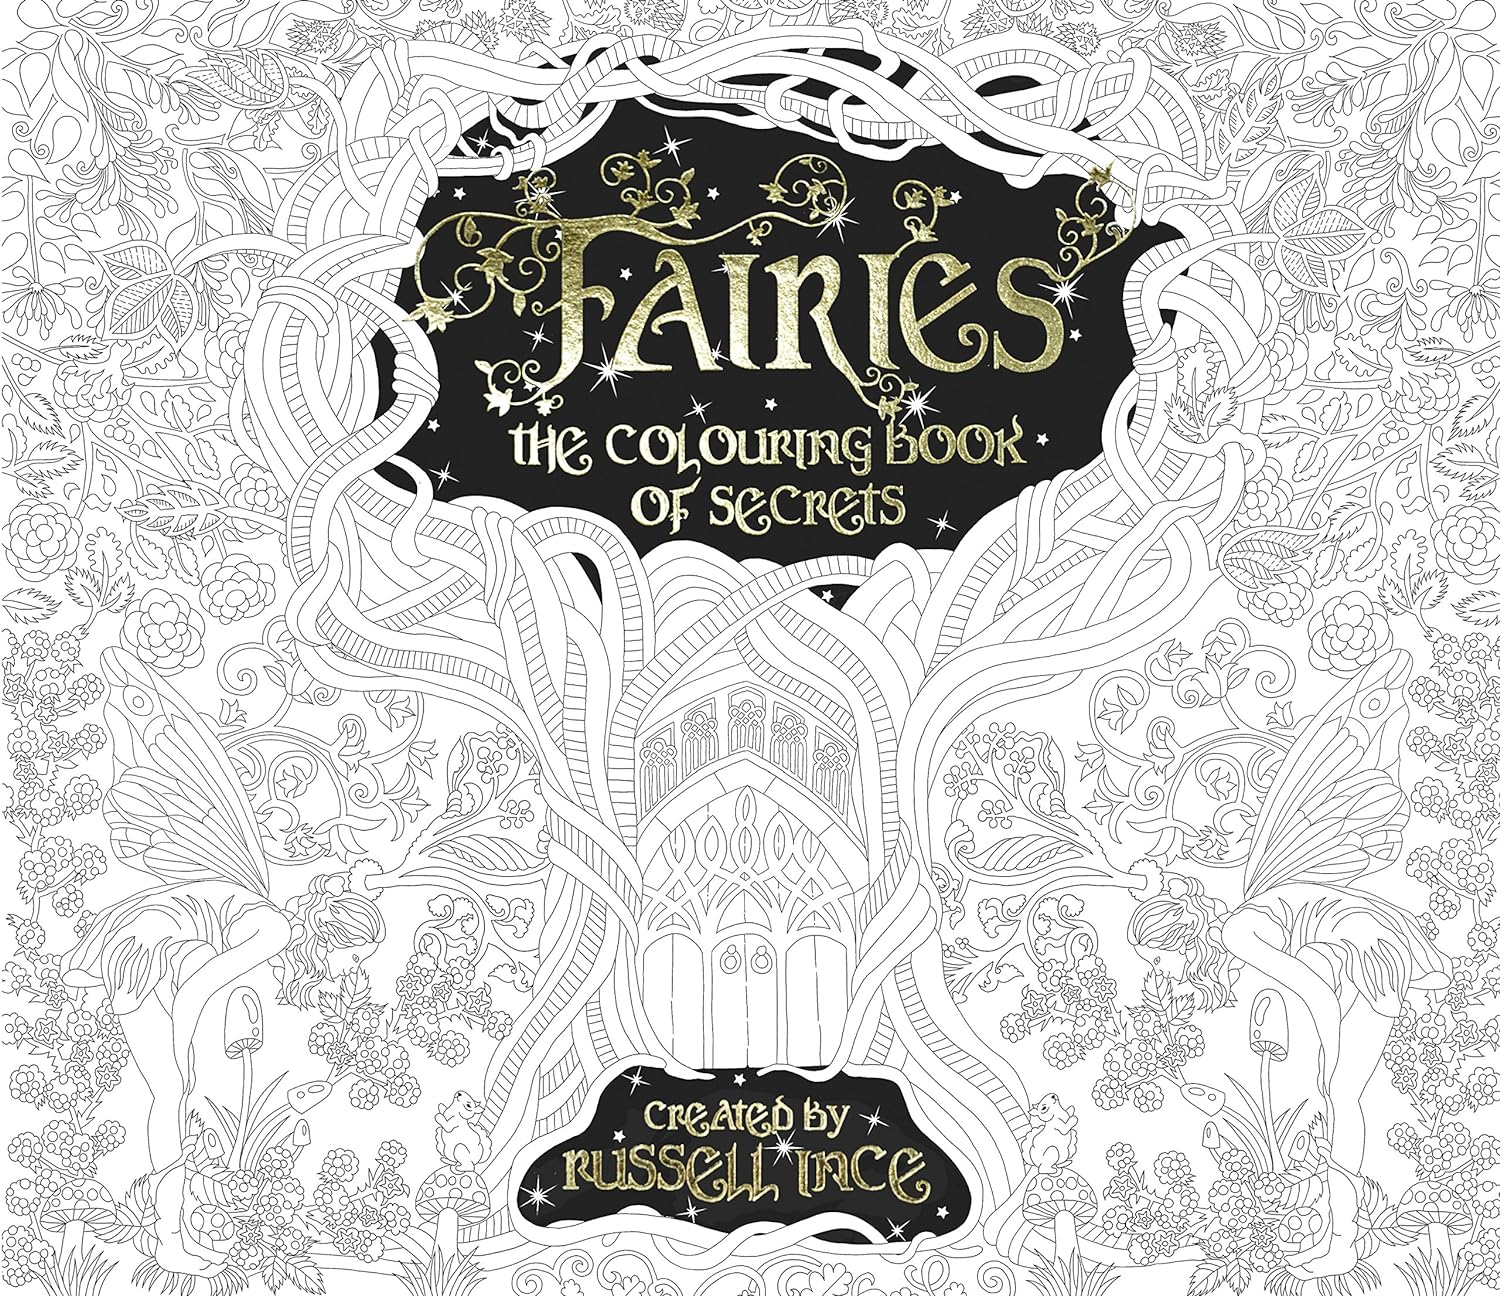 Fairies: The Colouring Book of Secrets